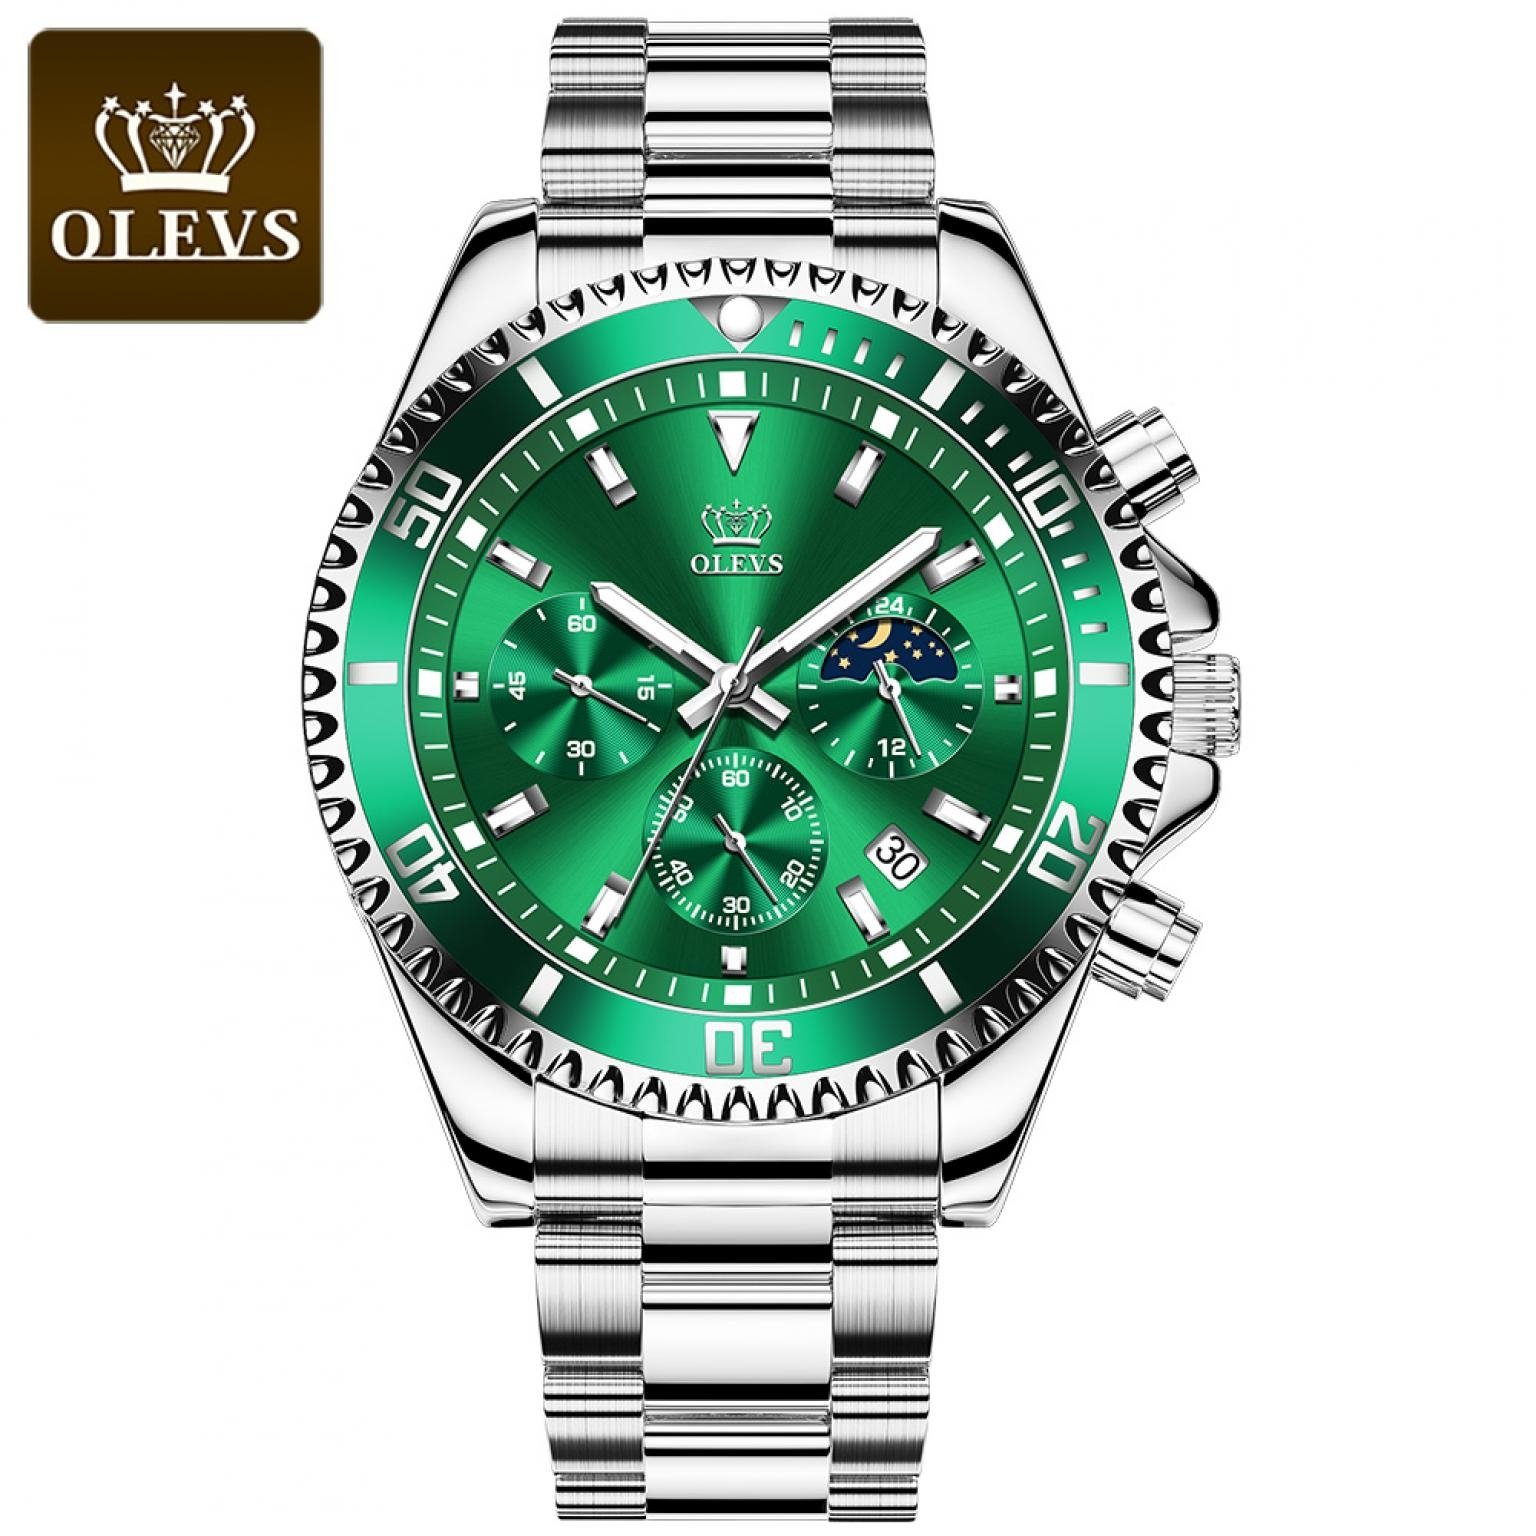  Original OLEVS Top Brand Luxury Men's Watches Sports Chronograph Waterproof Analog Date Quartz Men Wristwatches(OLEVS-2870)